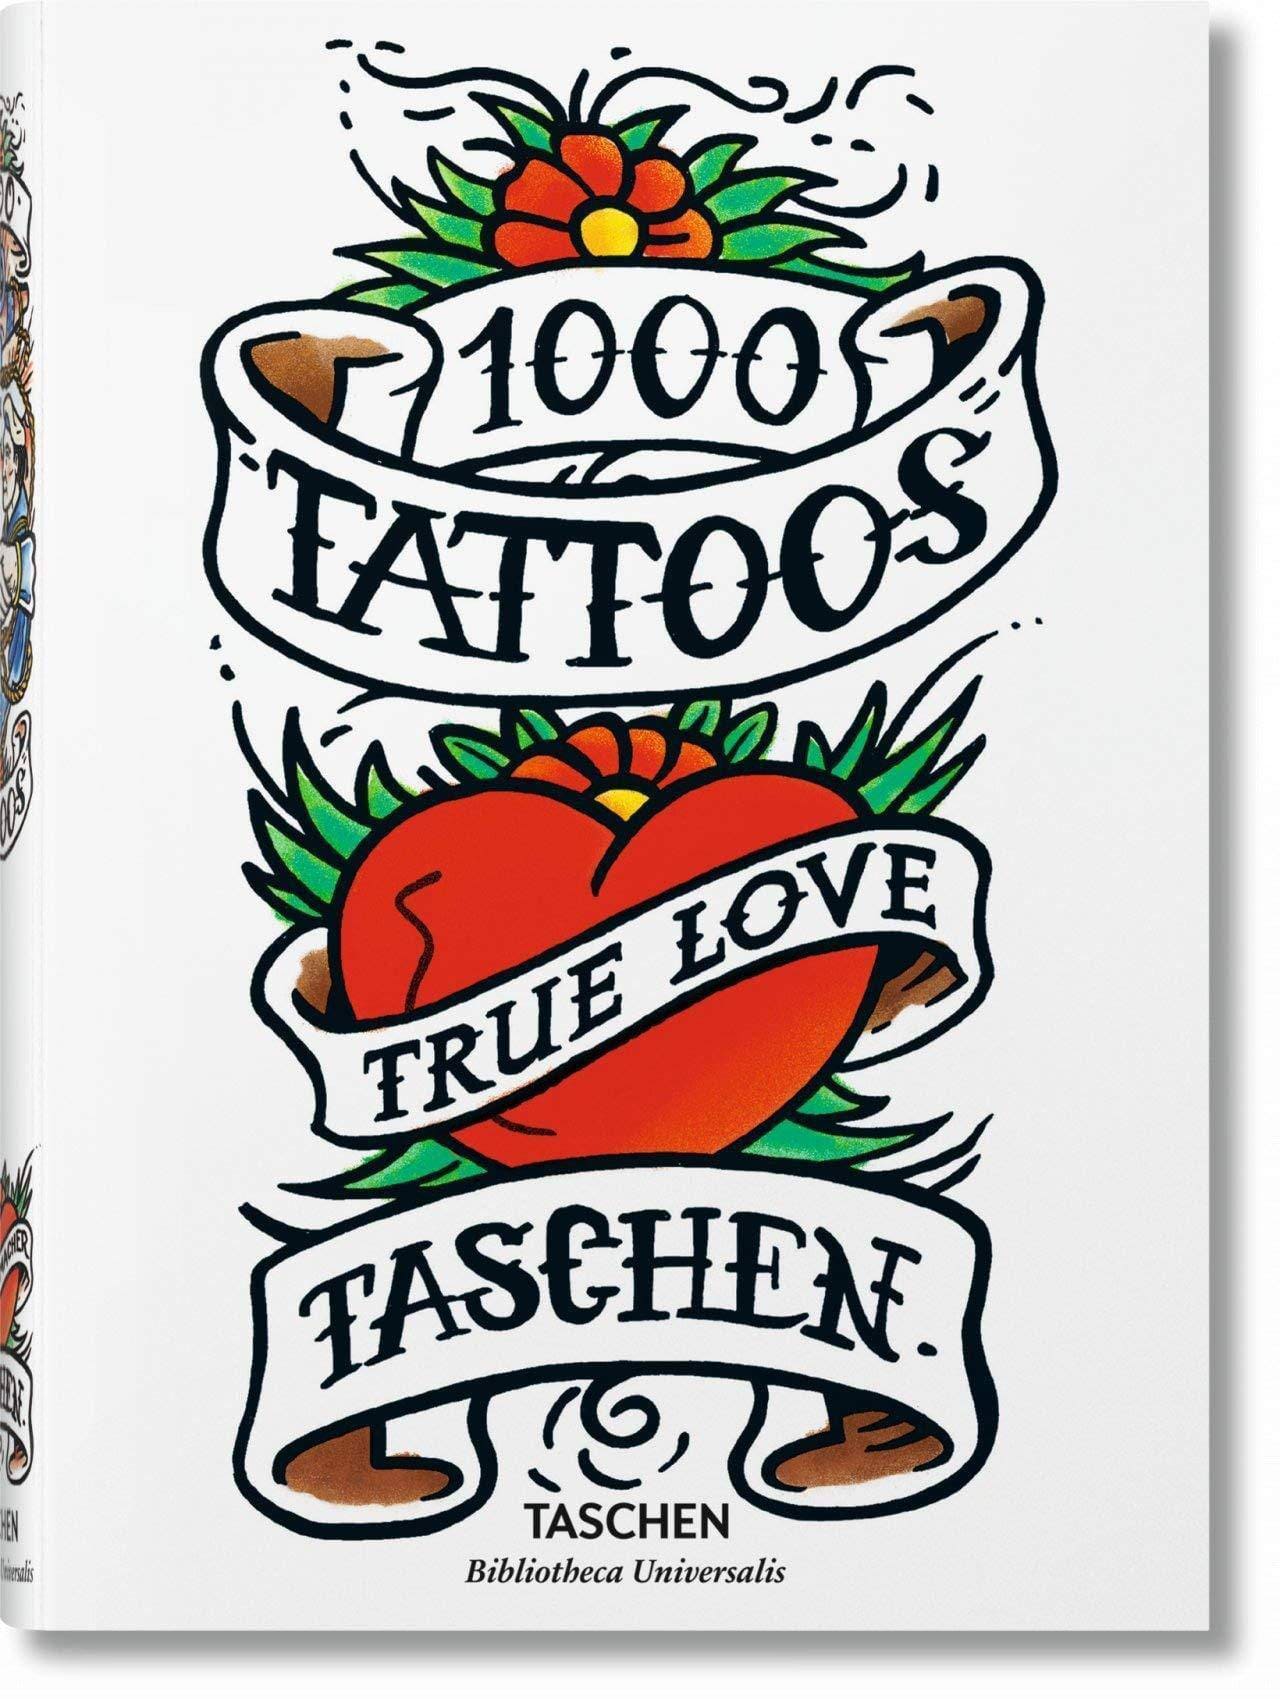 1000 Tattoos - SureShot Books Publishing LLC